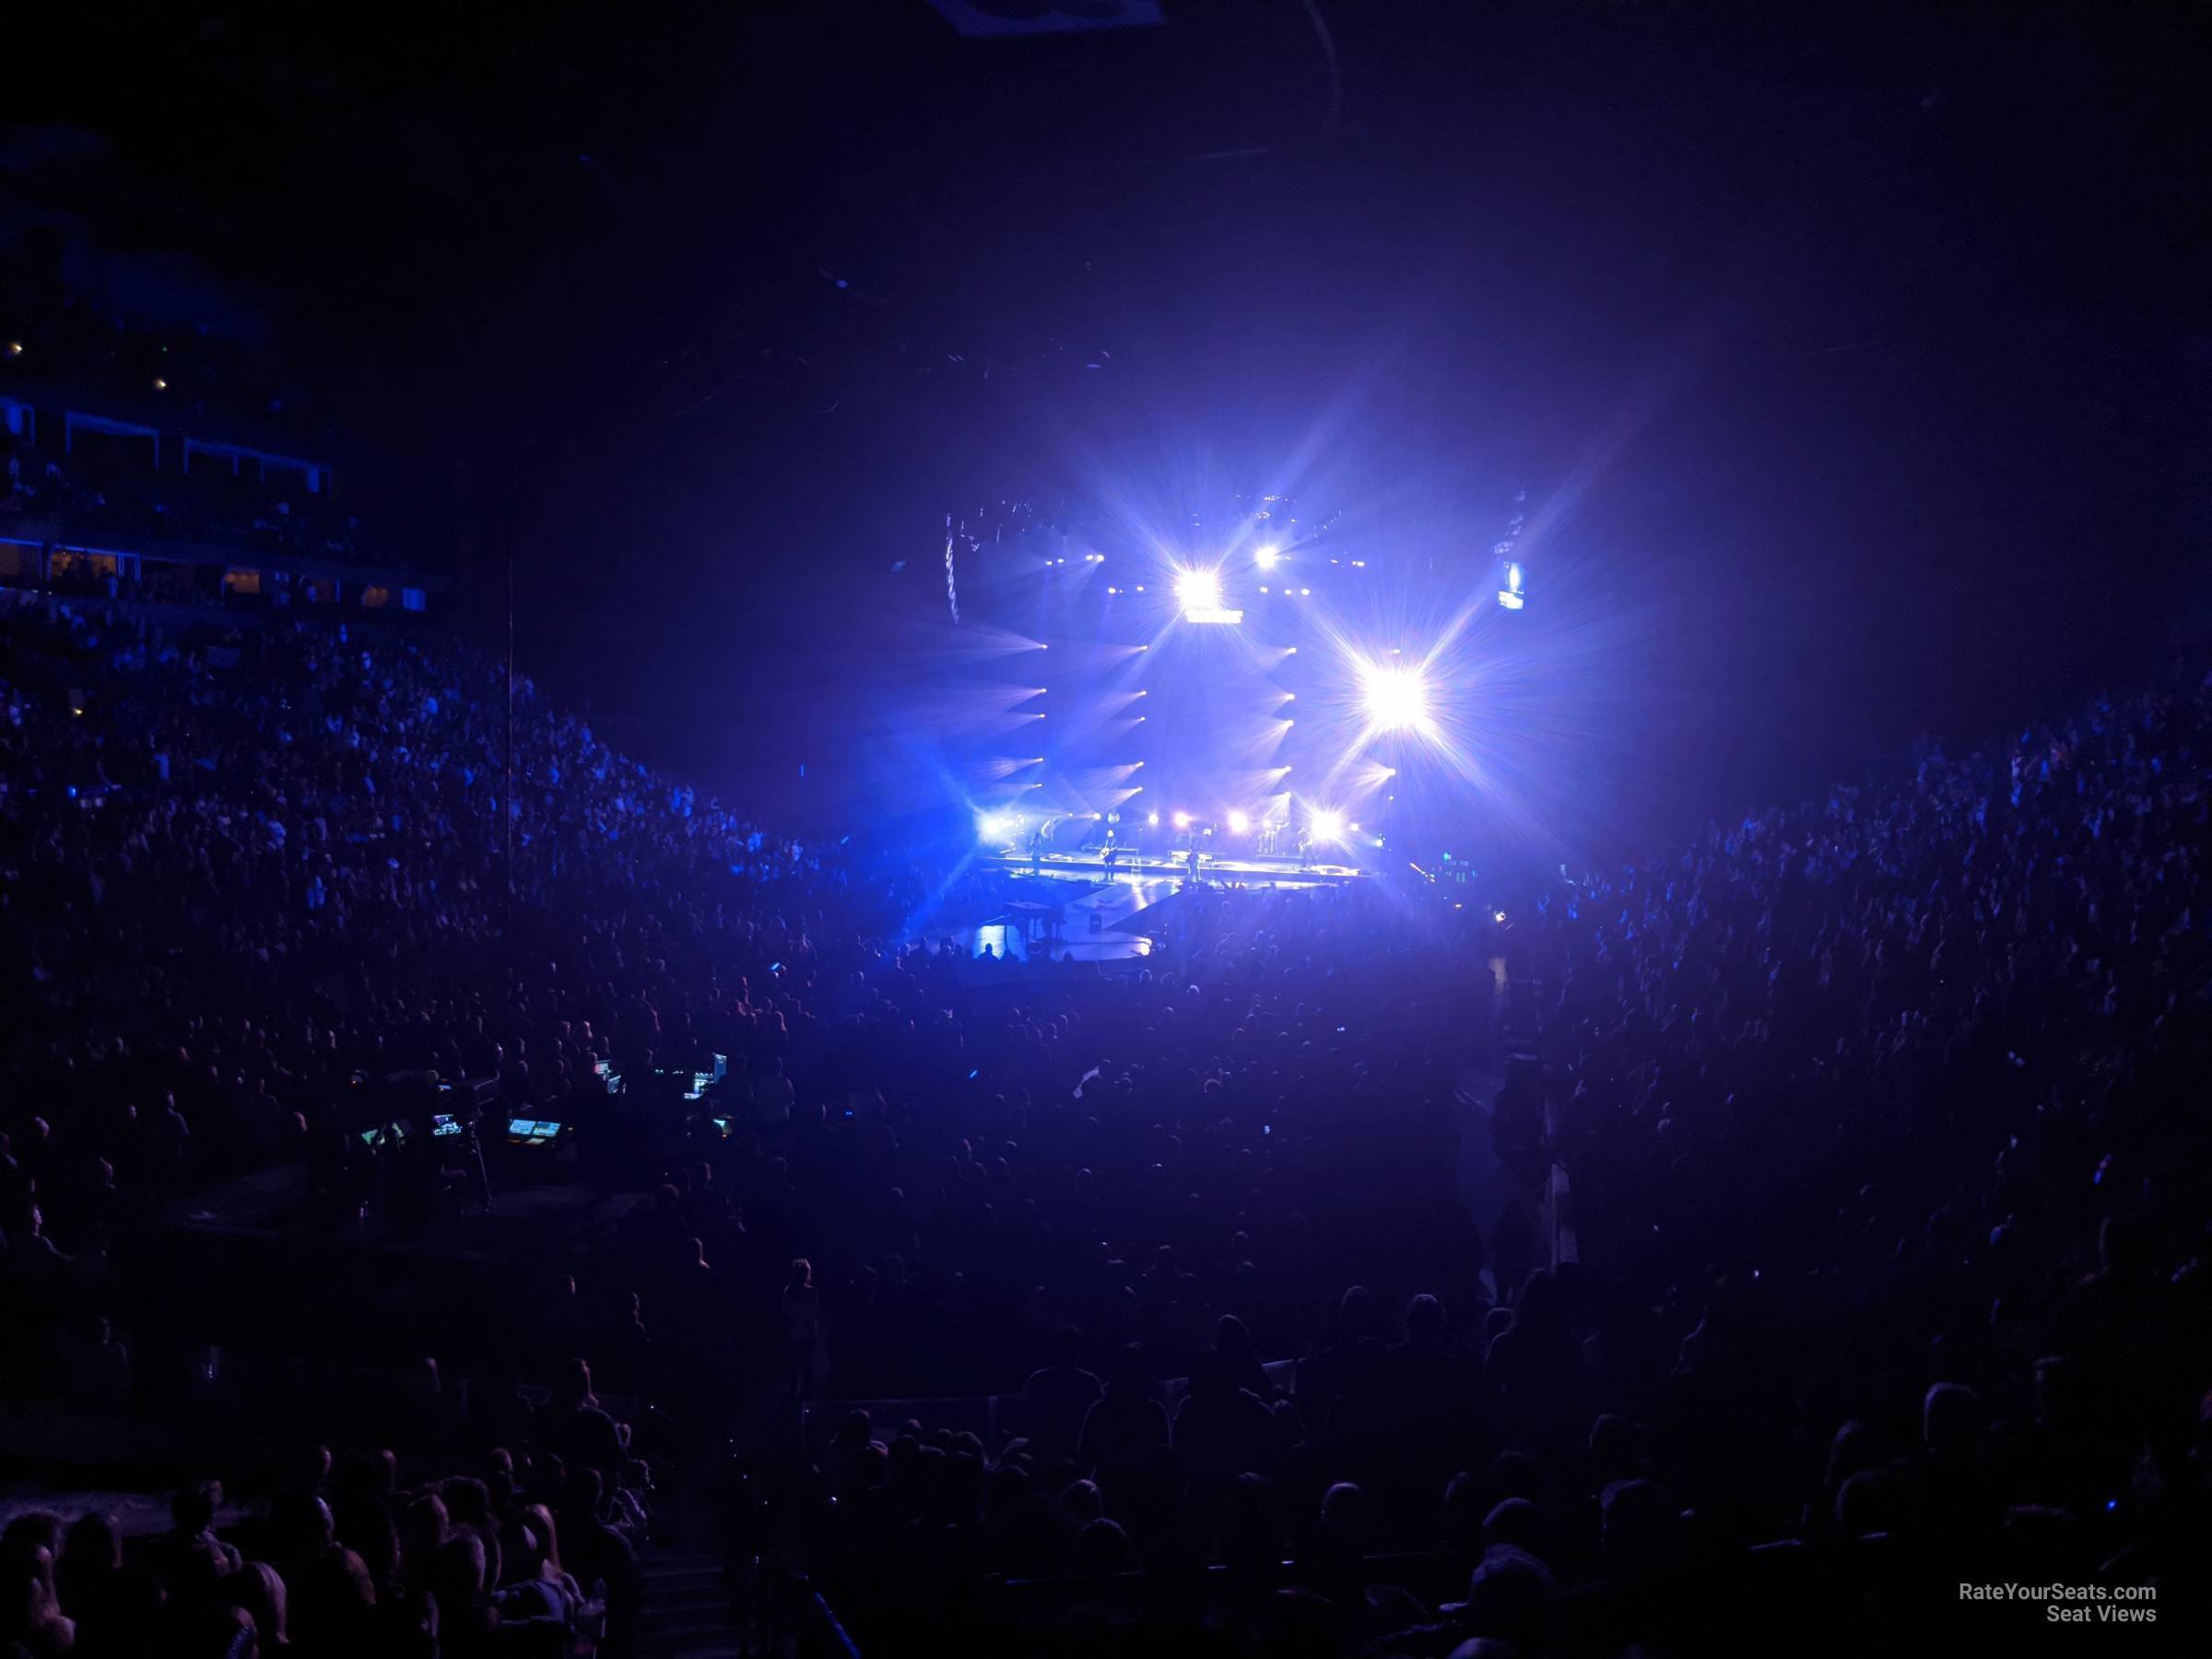 section 101, row f seat view  for concert - bridgestone arena